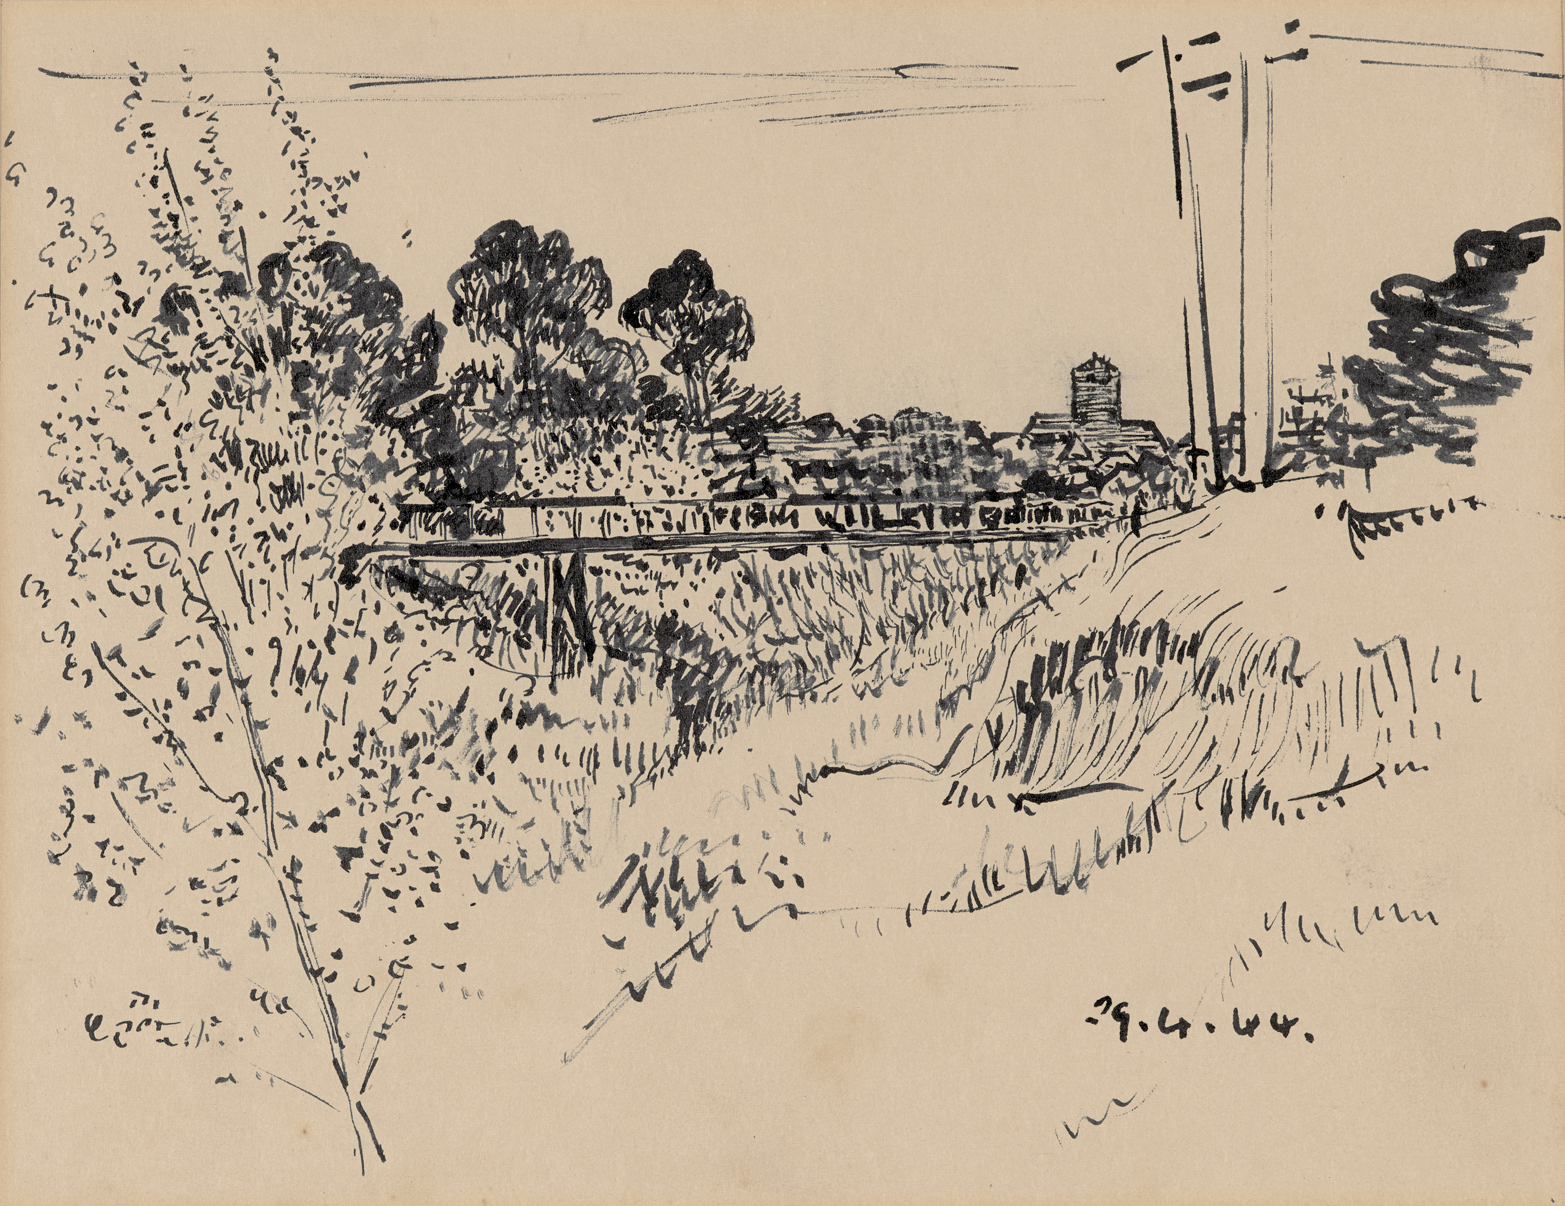 James Minogue, <em>Gardiner’s Creek, Glen Iris</em>, 1944, pen and ink on paper, 30.5 x 24 cm, Town Hall Gallery collection.